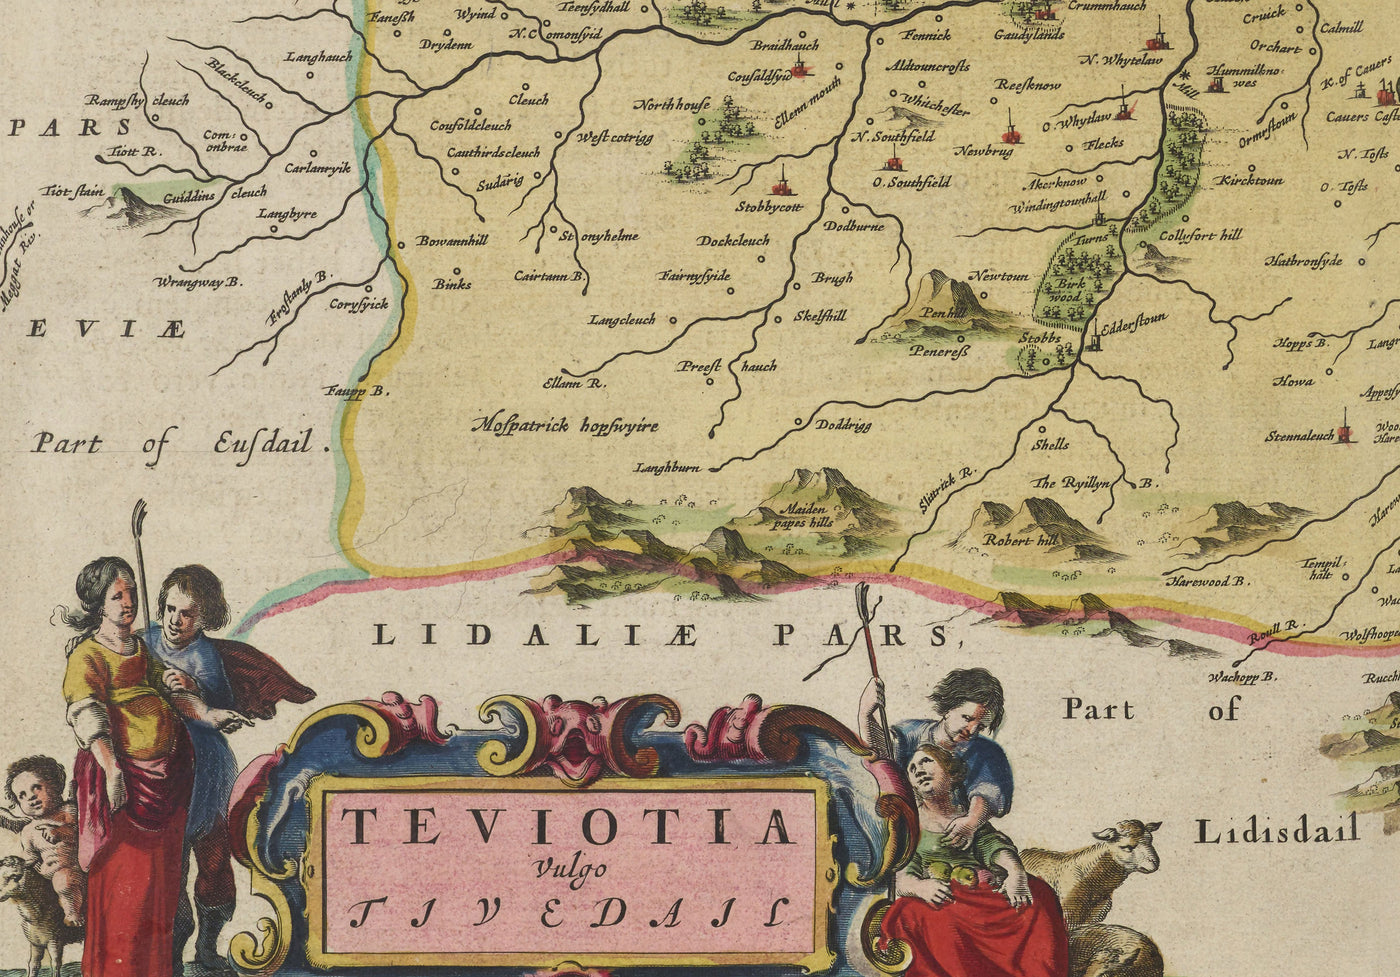 Ancienne carte du Roxburghshire en 1665 par Joan Blaeu - Roxburgh, Branxholm, Hawick, Harwood on Teviot, Ancrum